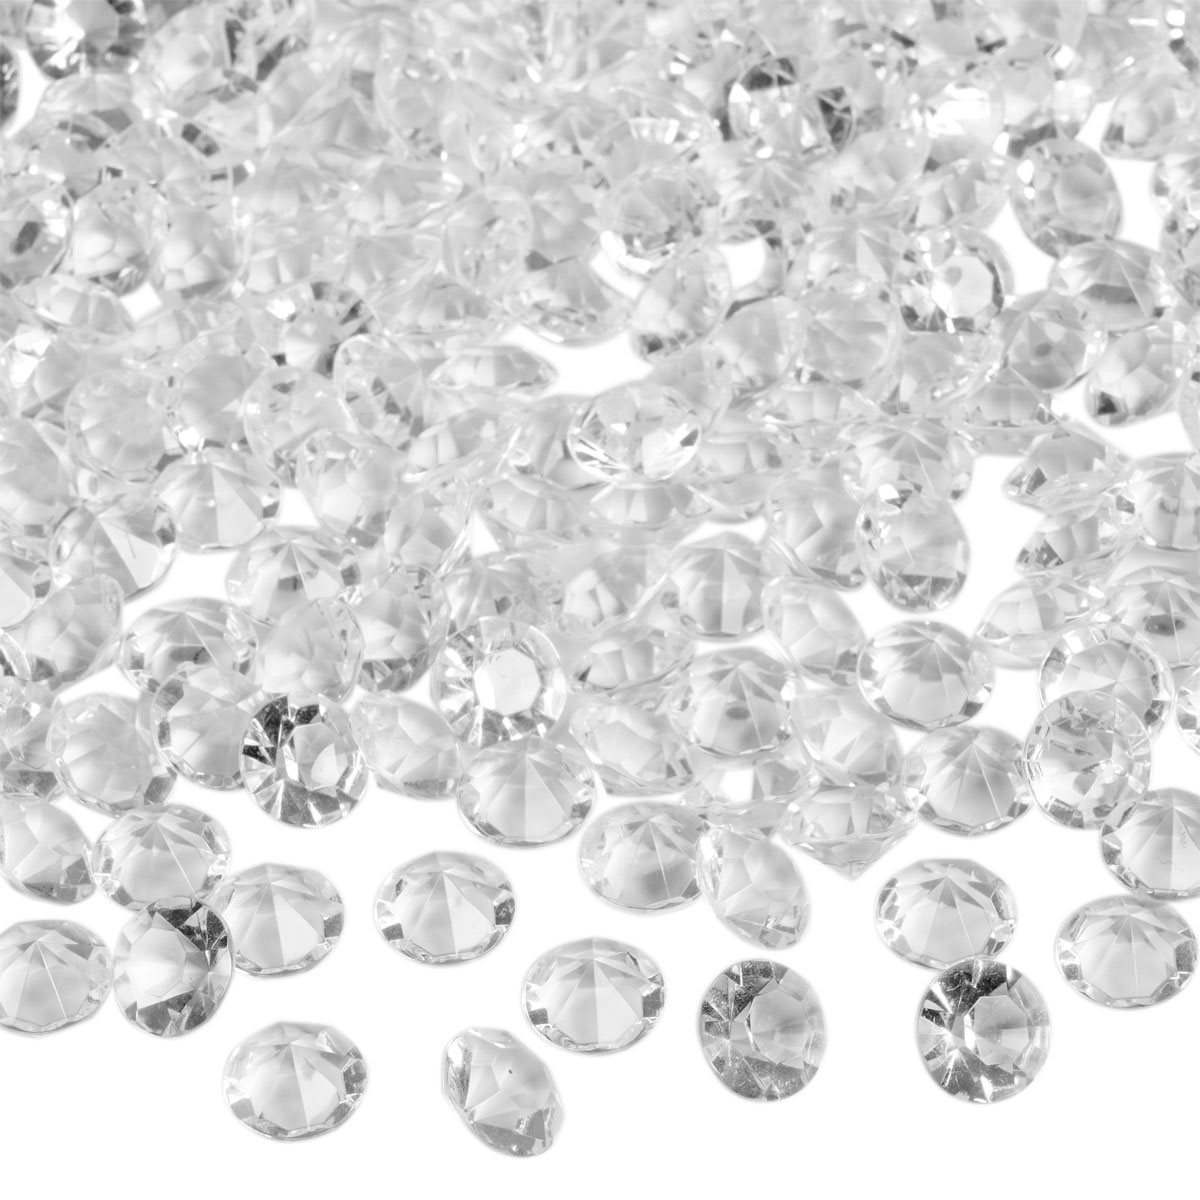 solidaritet uudgrundelig Quagmire Pynte diamanter klar 1,2cm, 200 stk.